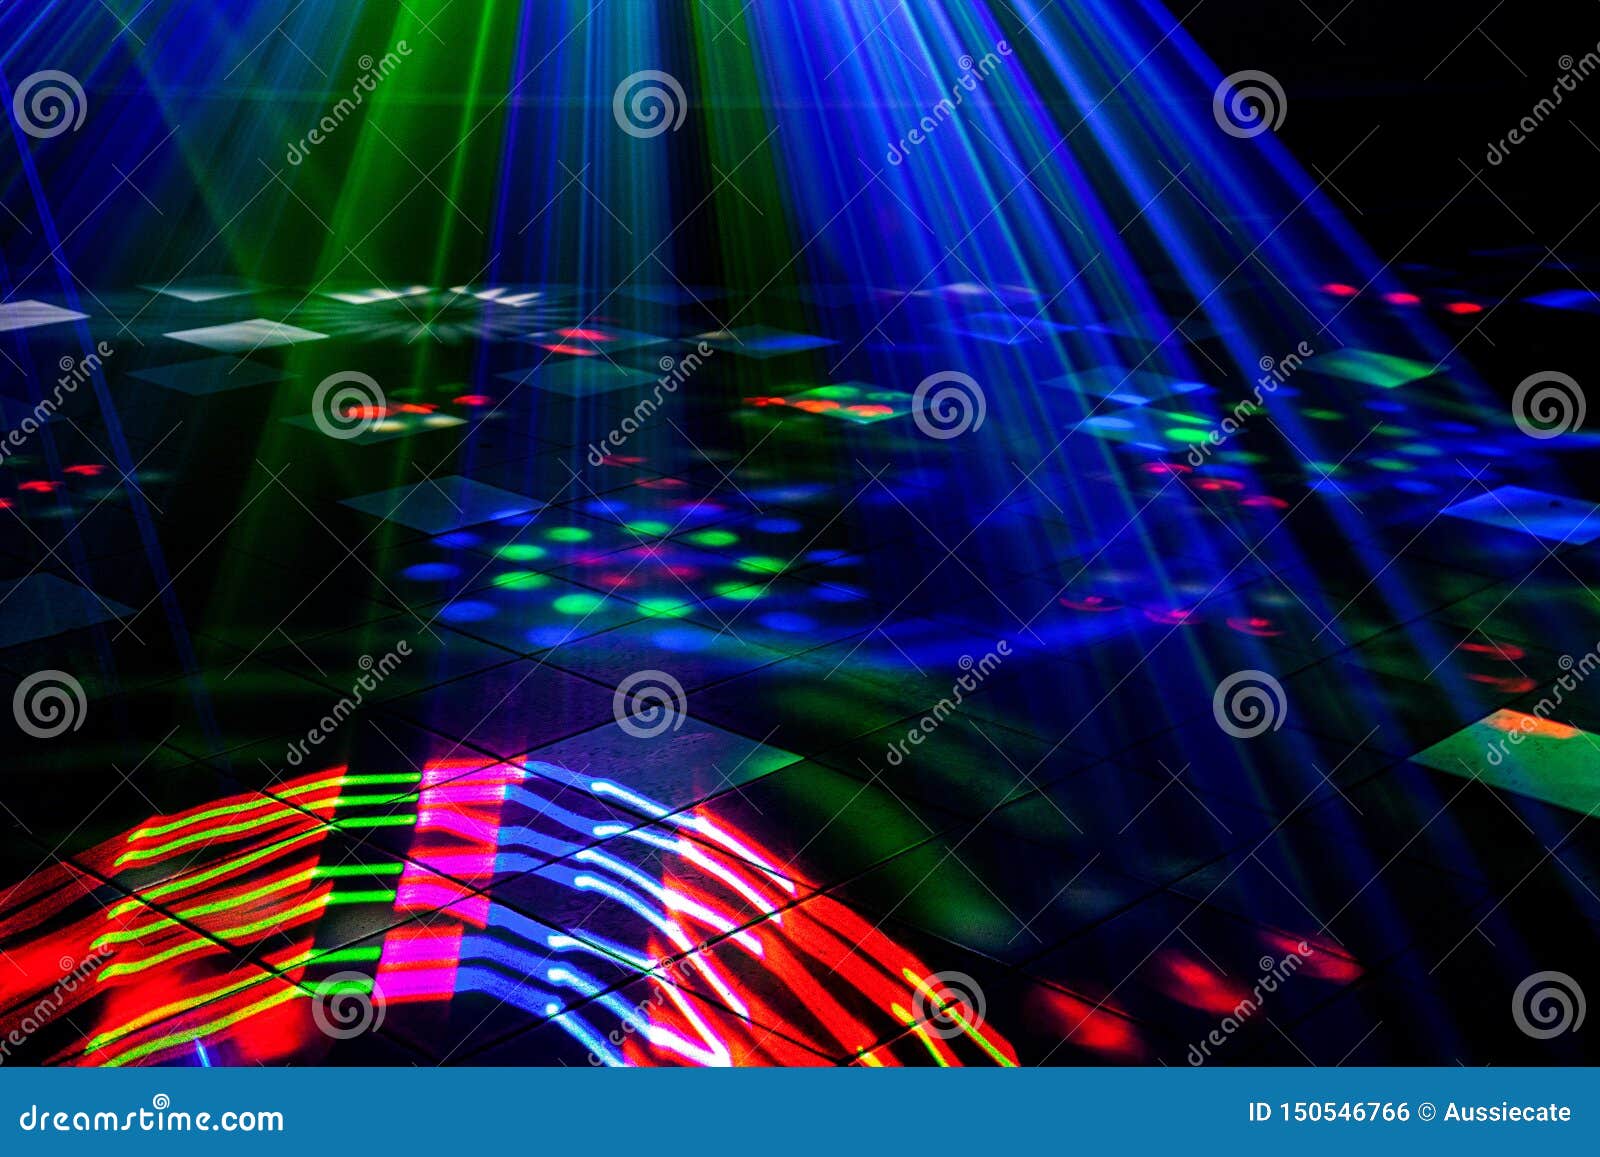 bright nightclub red, green, purple, white, pink, blue laser lights cutting through smoke machine smoke